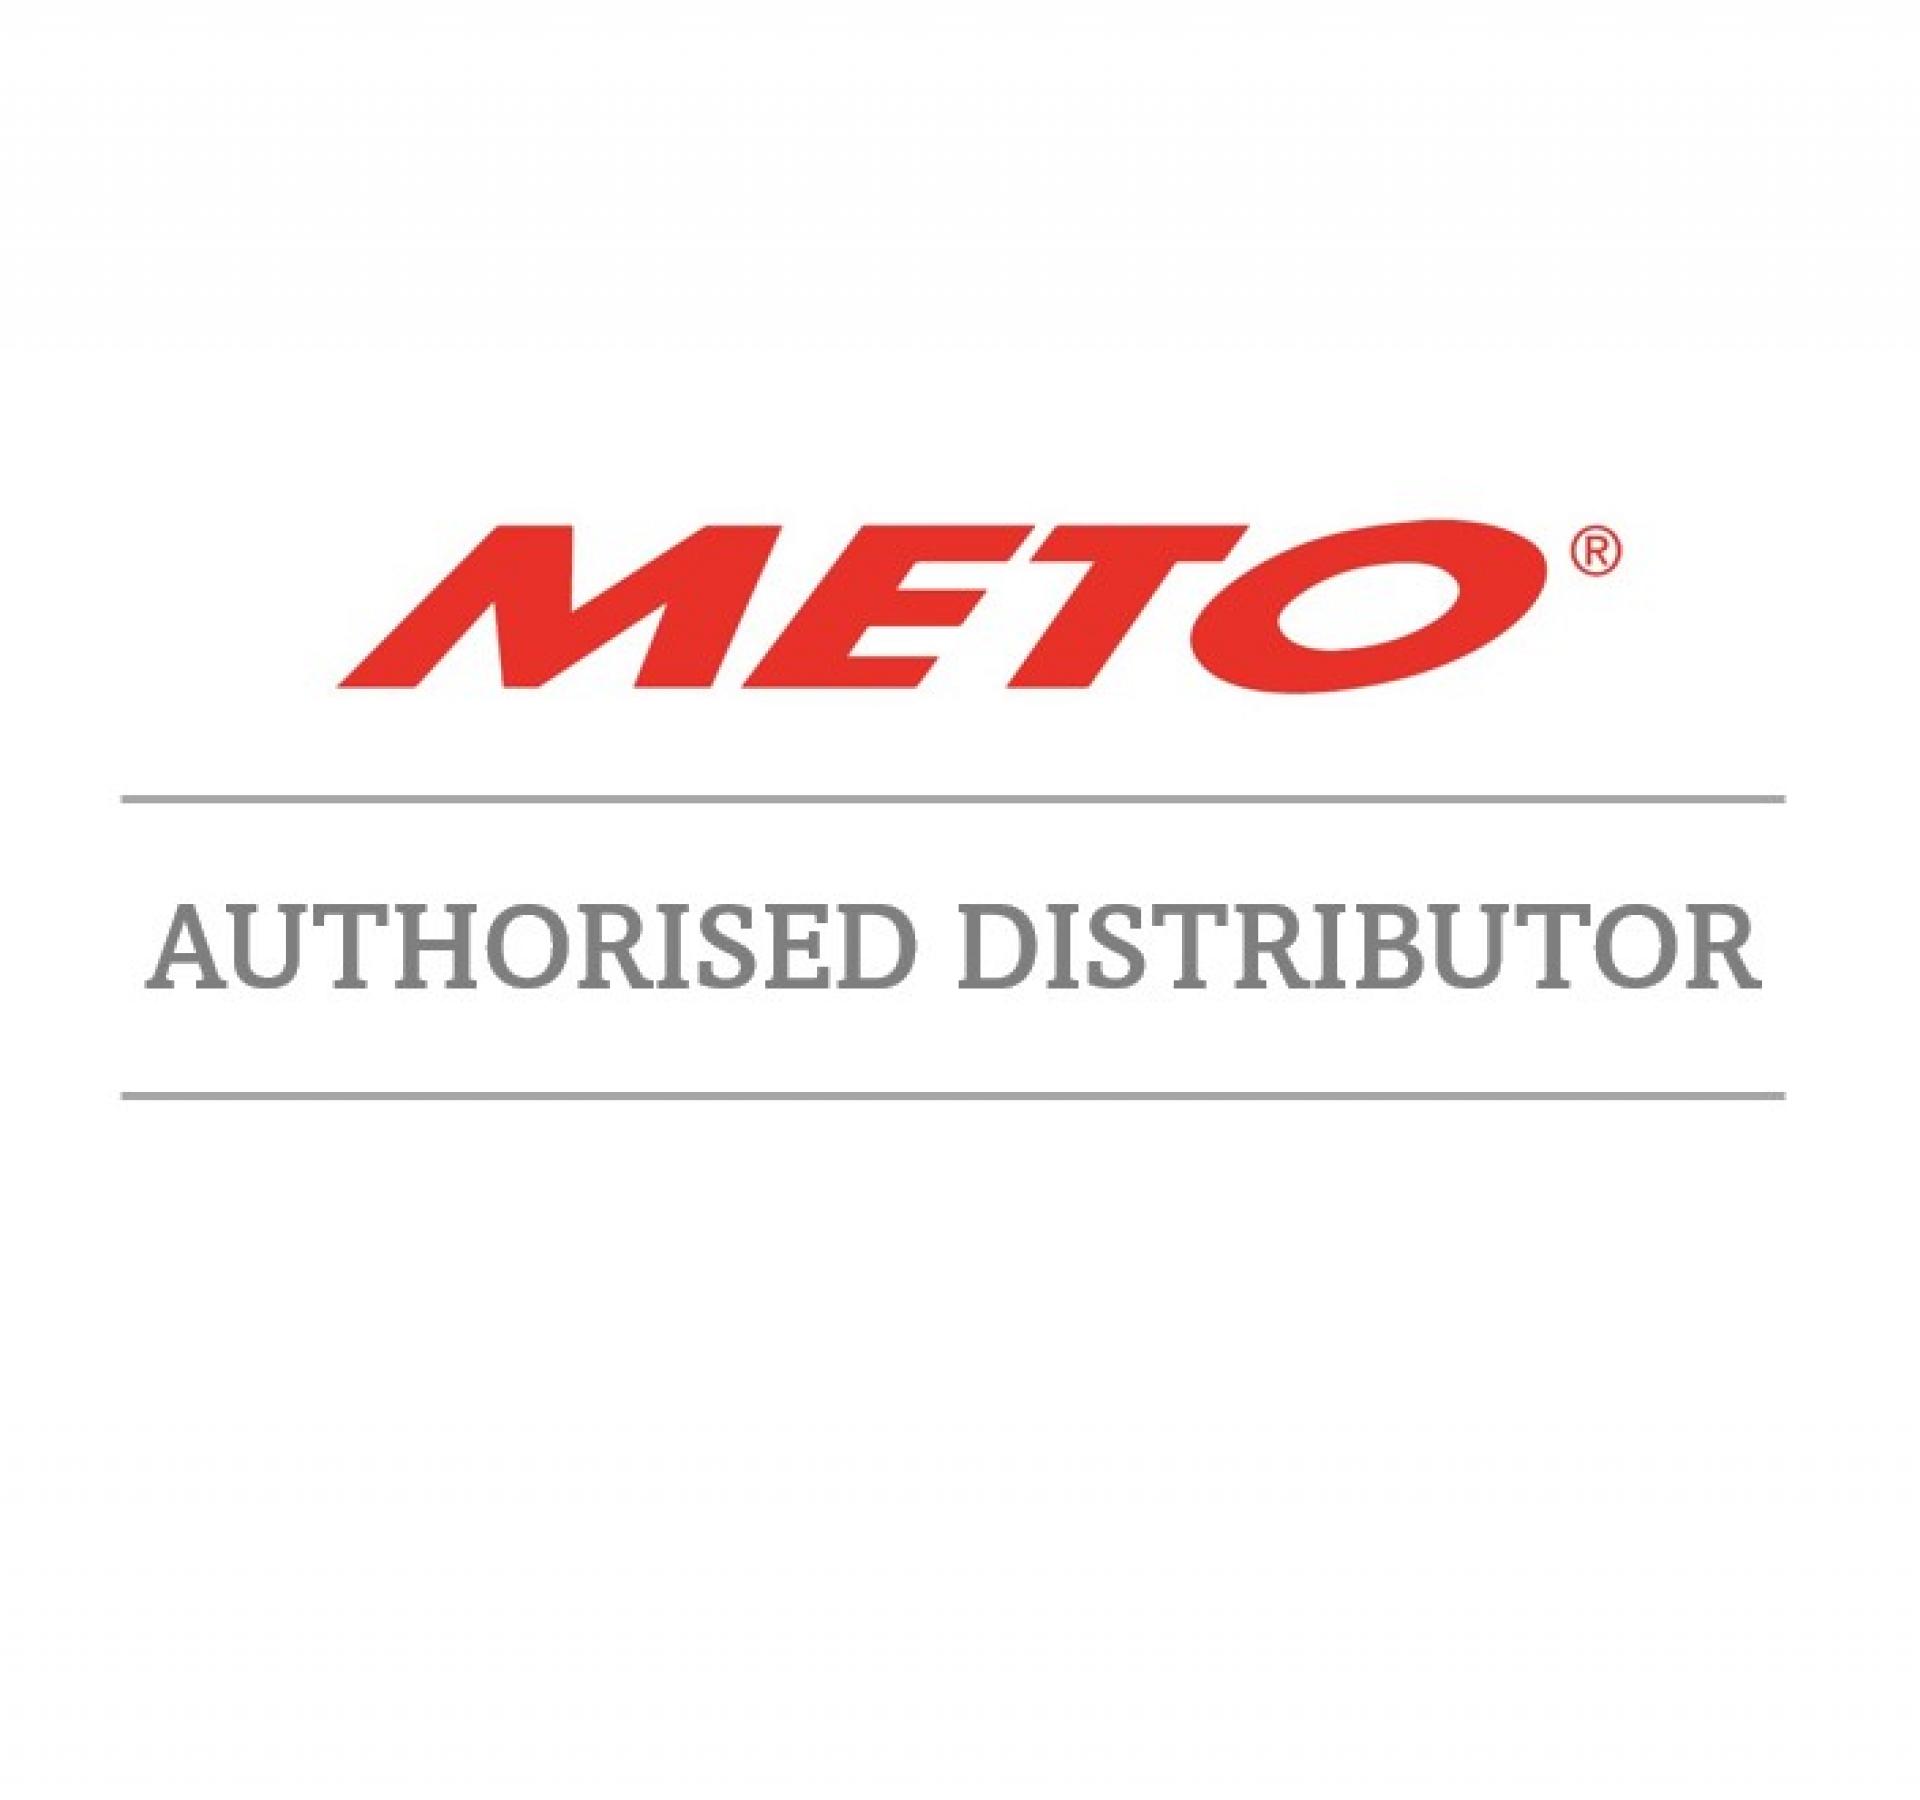 Meto authorised distributor